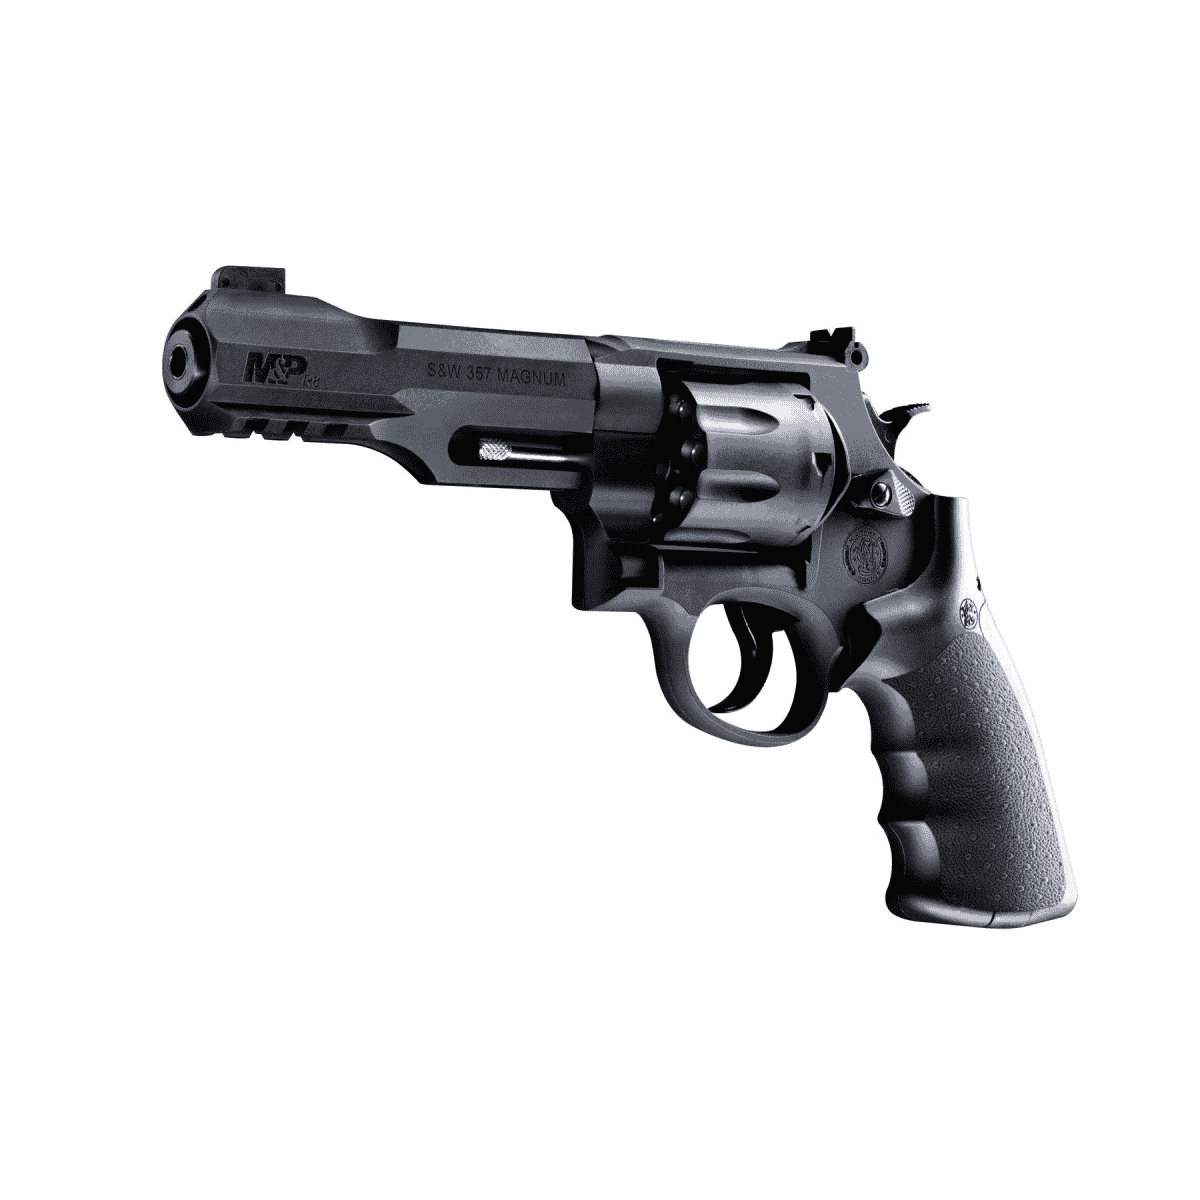 Revolver airsoft Smith & Wesson M&P R8 2.6447